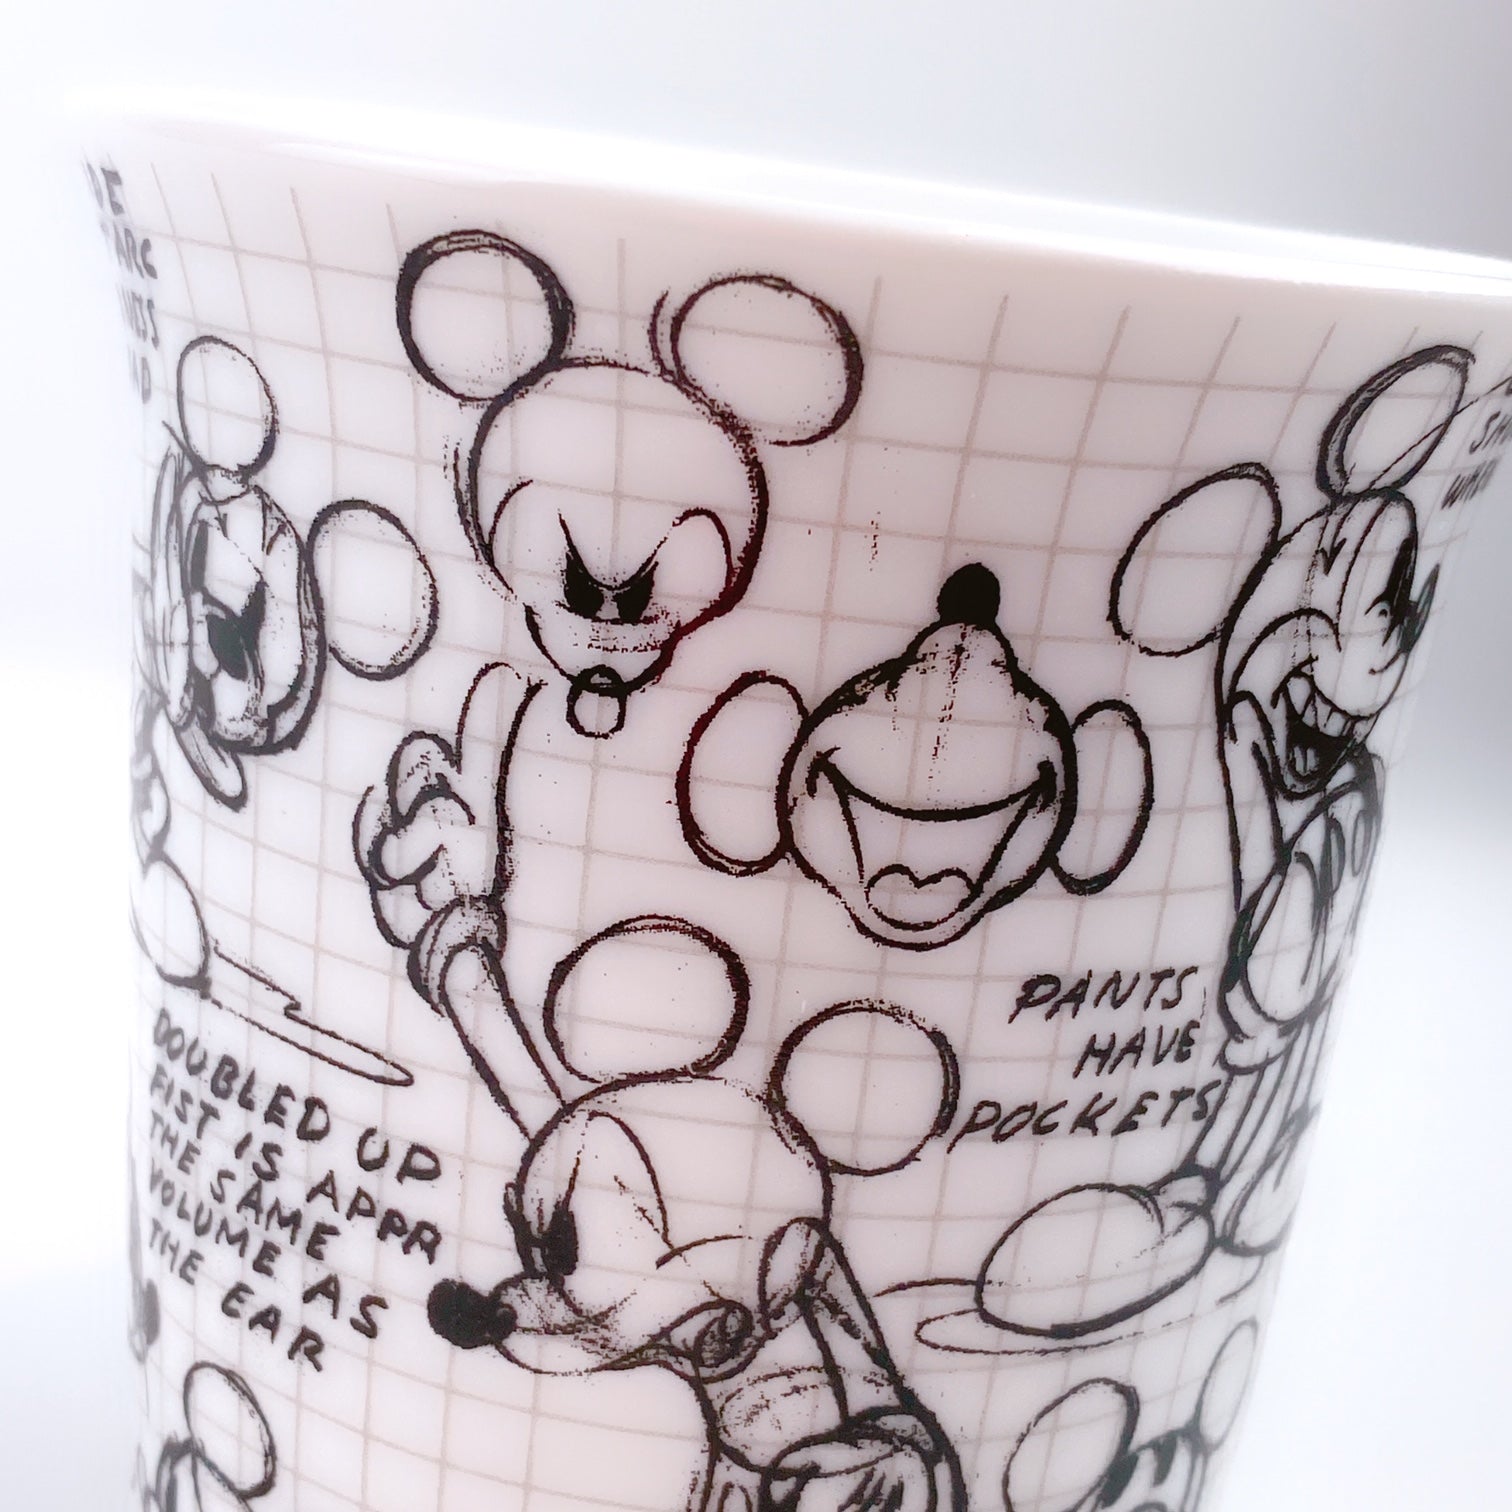 Mickey Mouse Mug | shopDisney